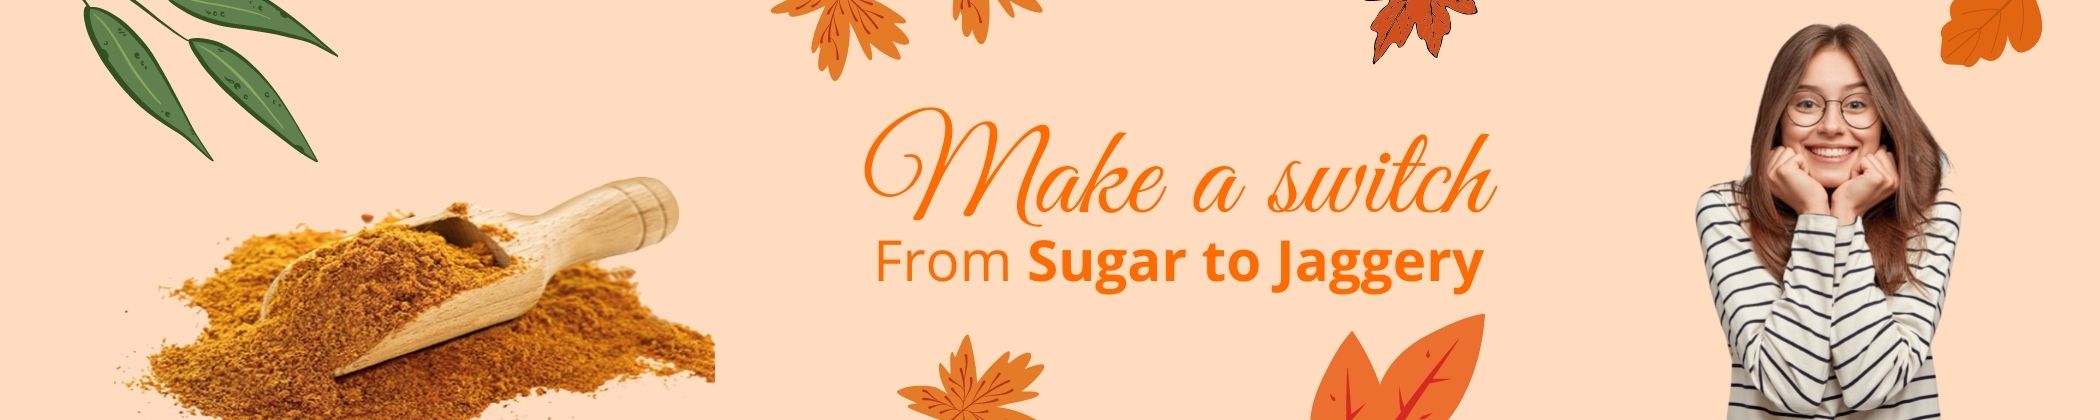 Buy Organic Sweeteners Online - Healthy Master